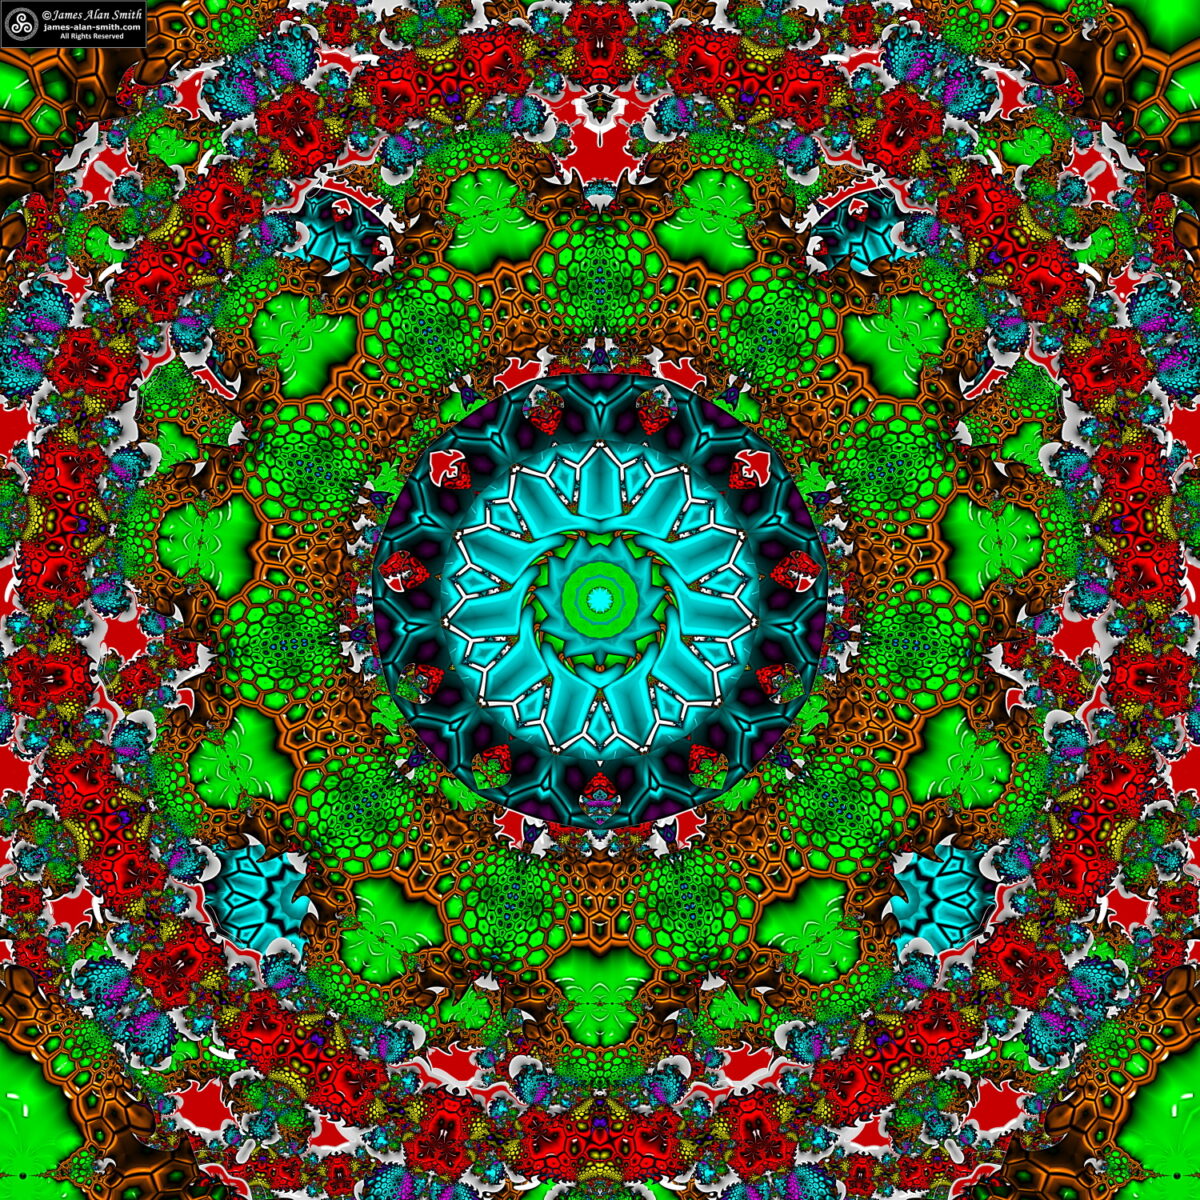 Unusual Mandala Series #031622: Artwork by James Alan Smith